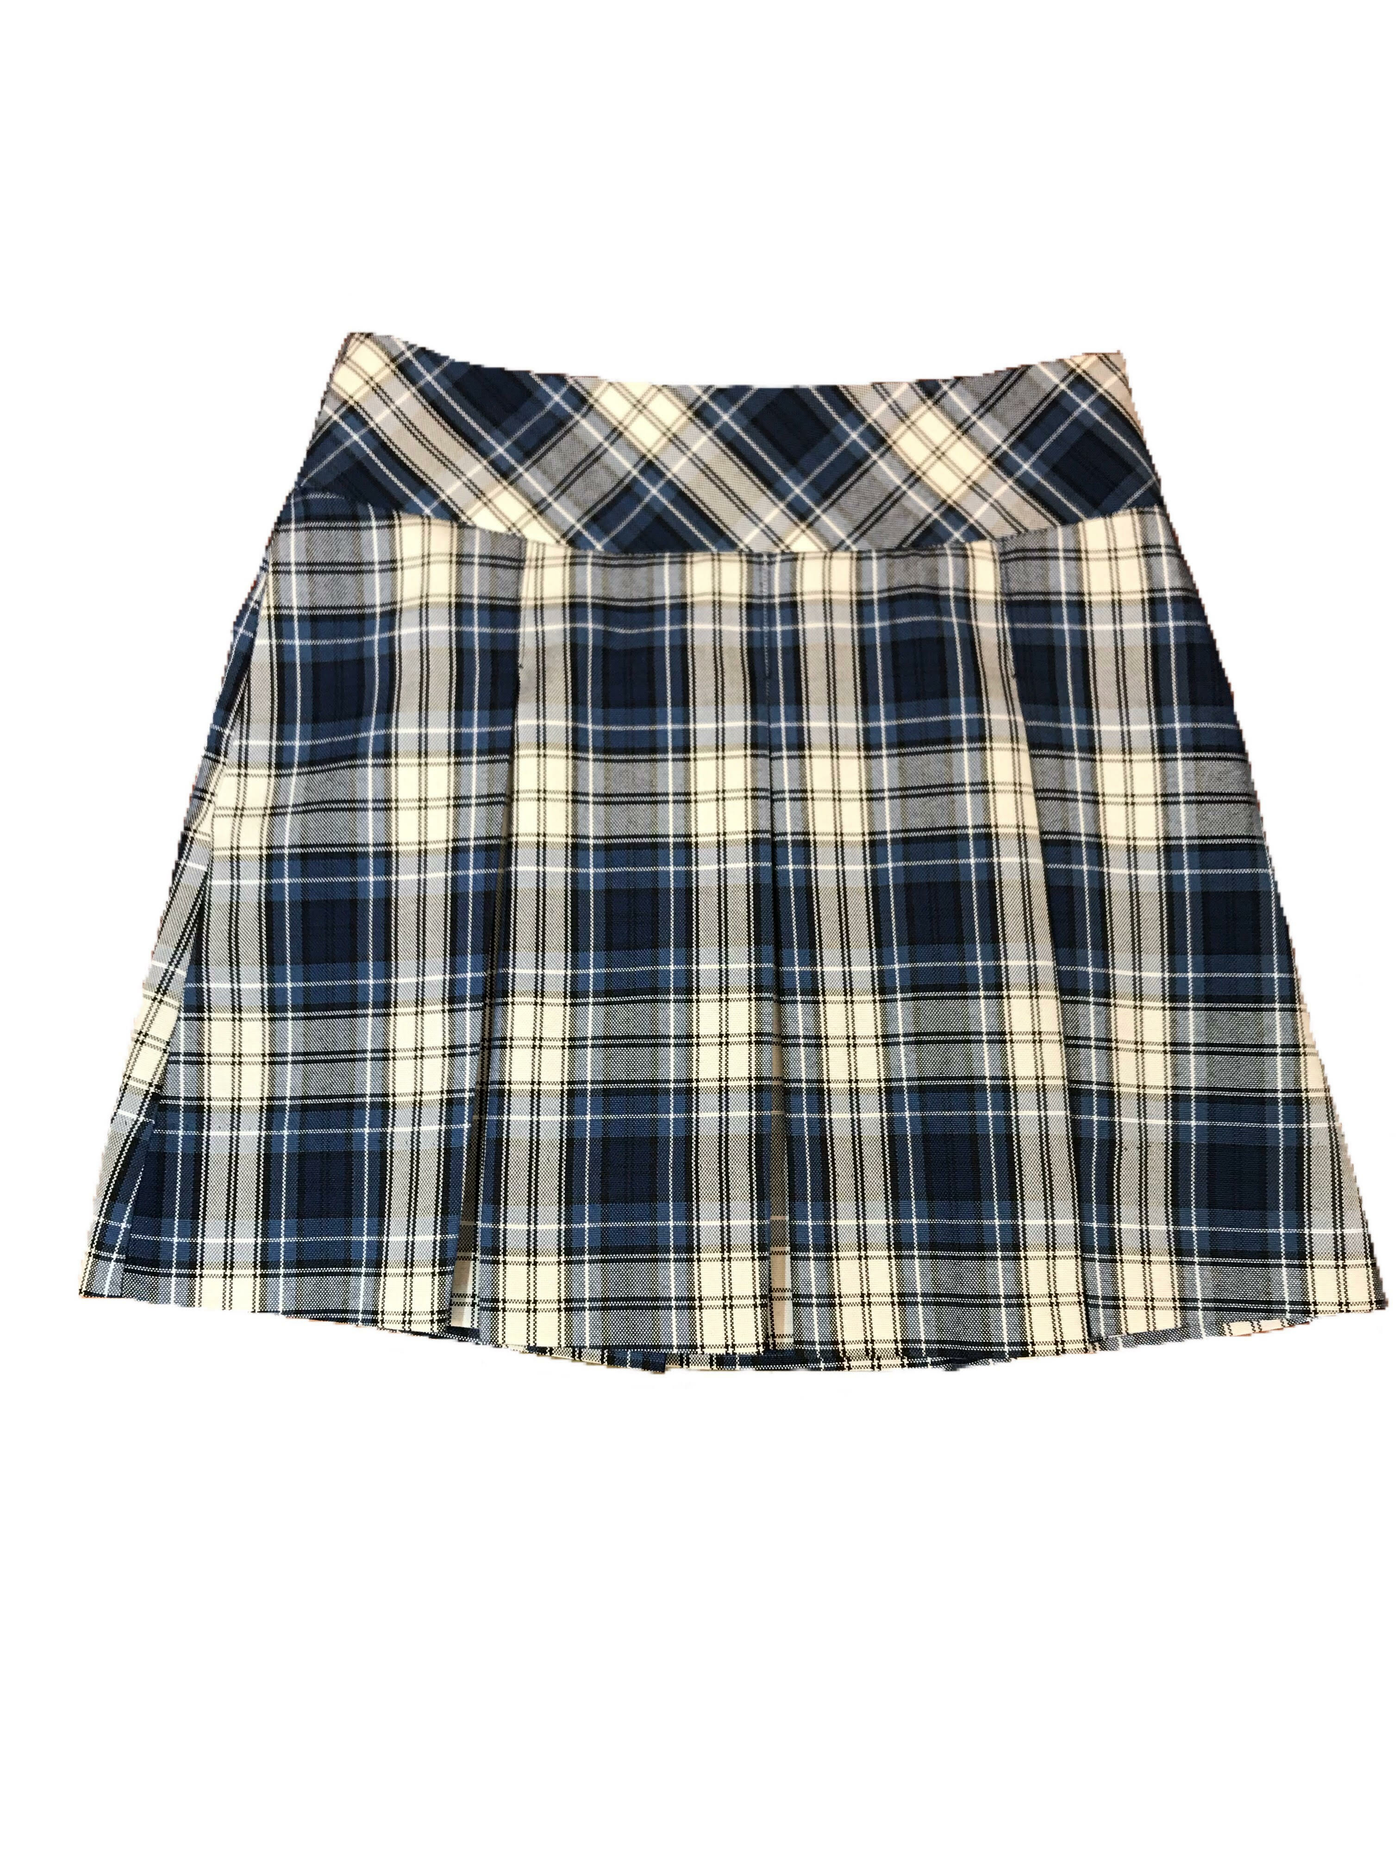 Madison Academy plaid skirt